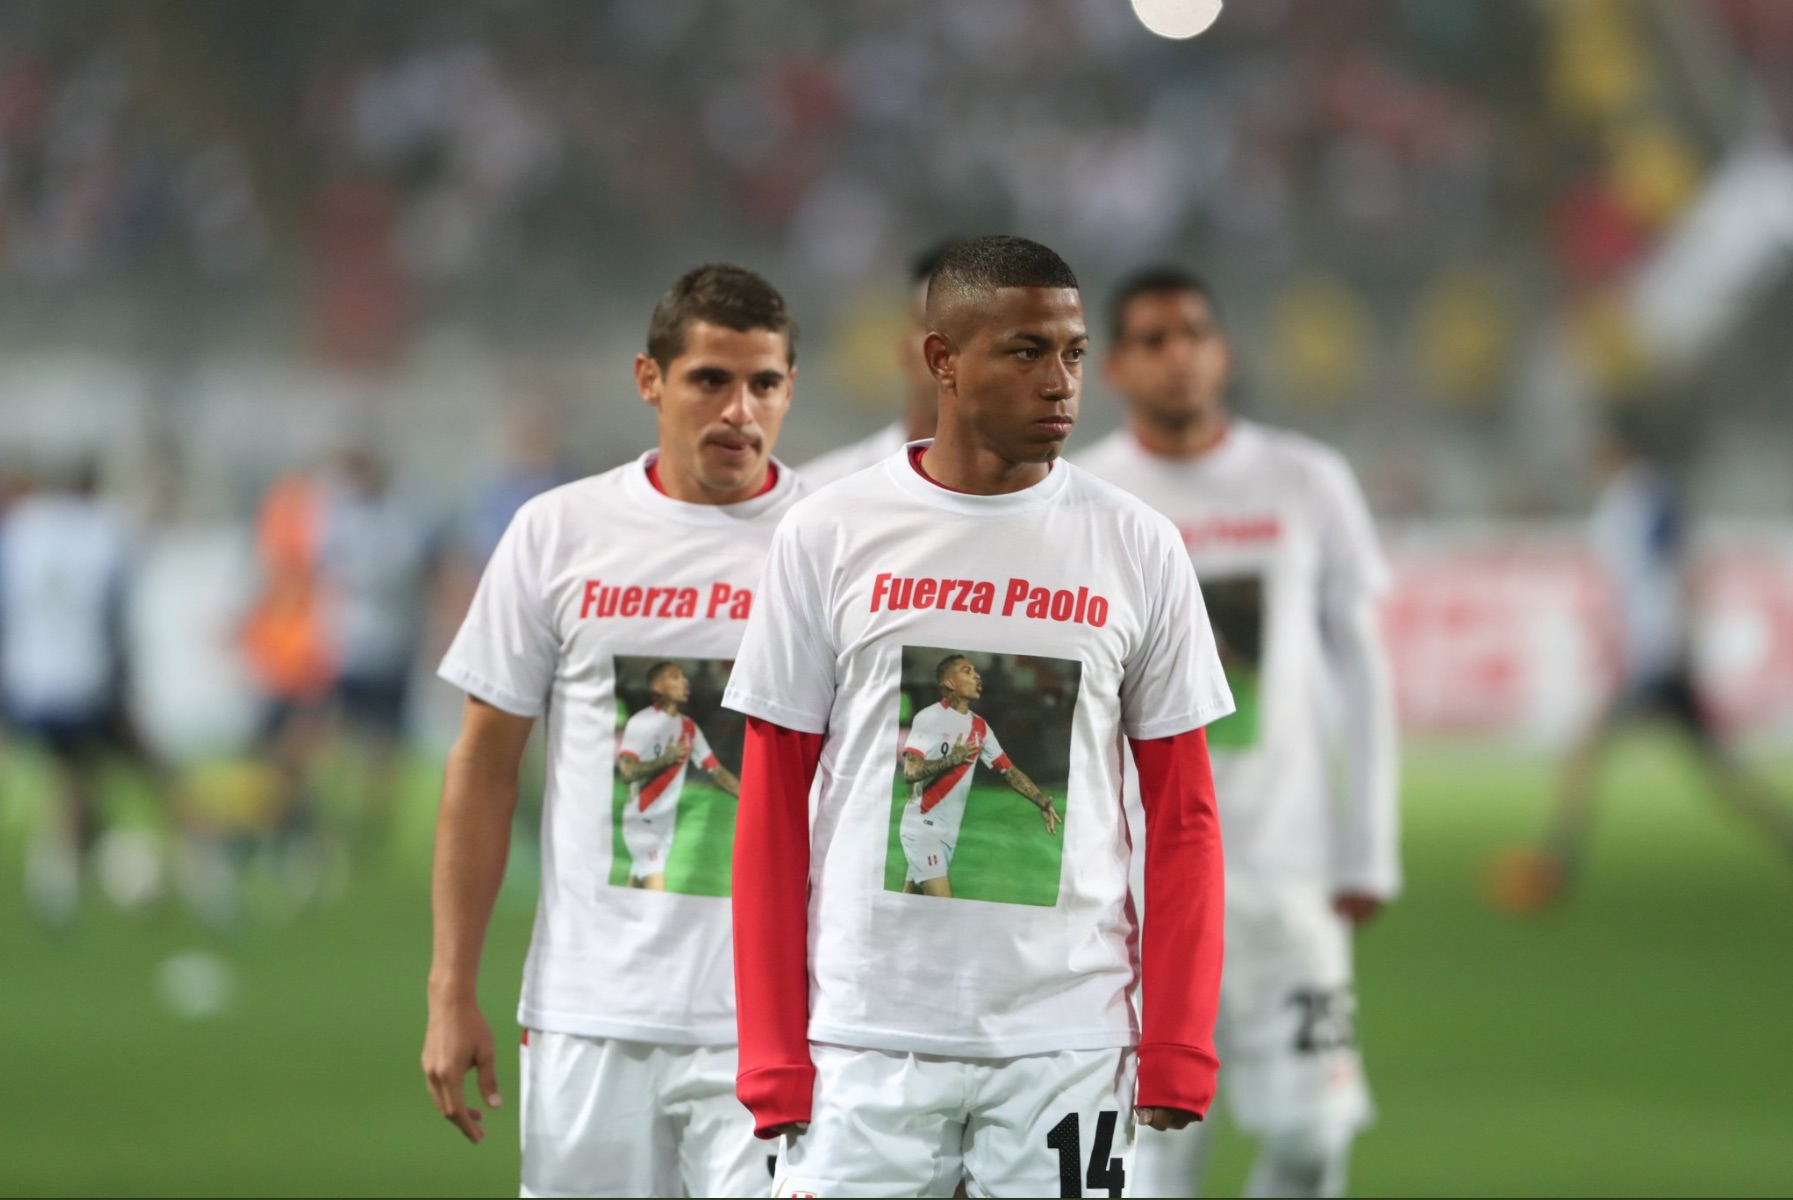 Peru's soccer stars' jerseys